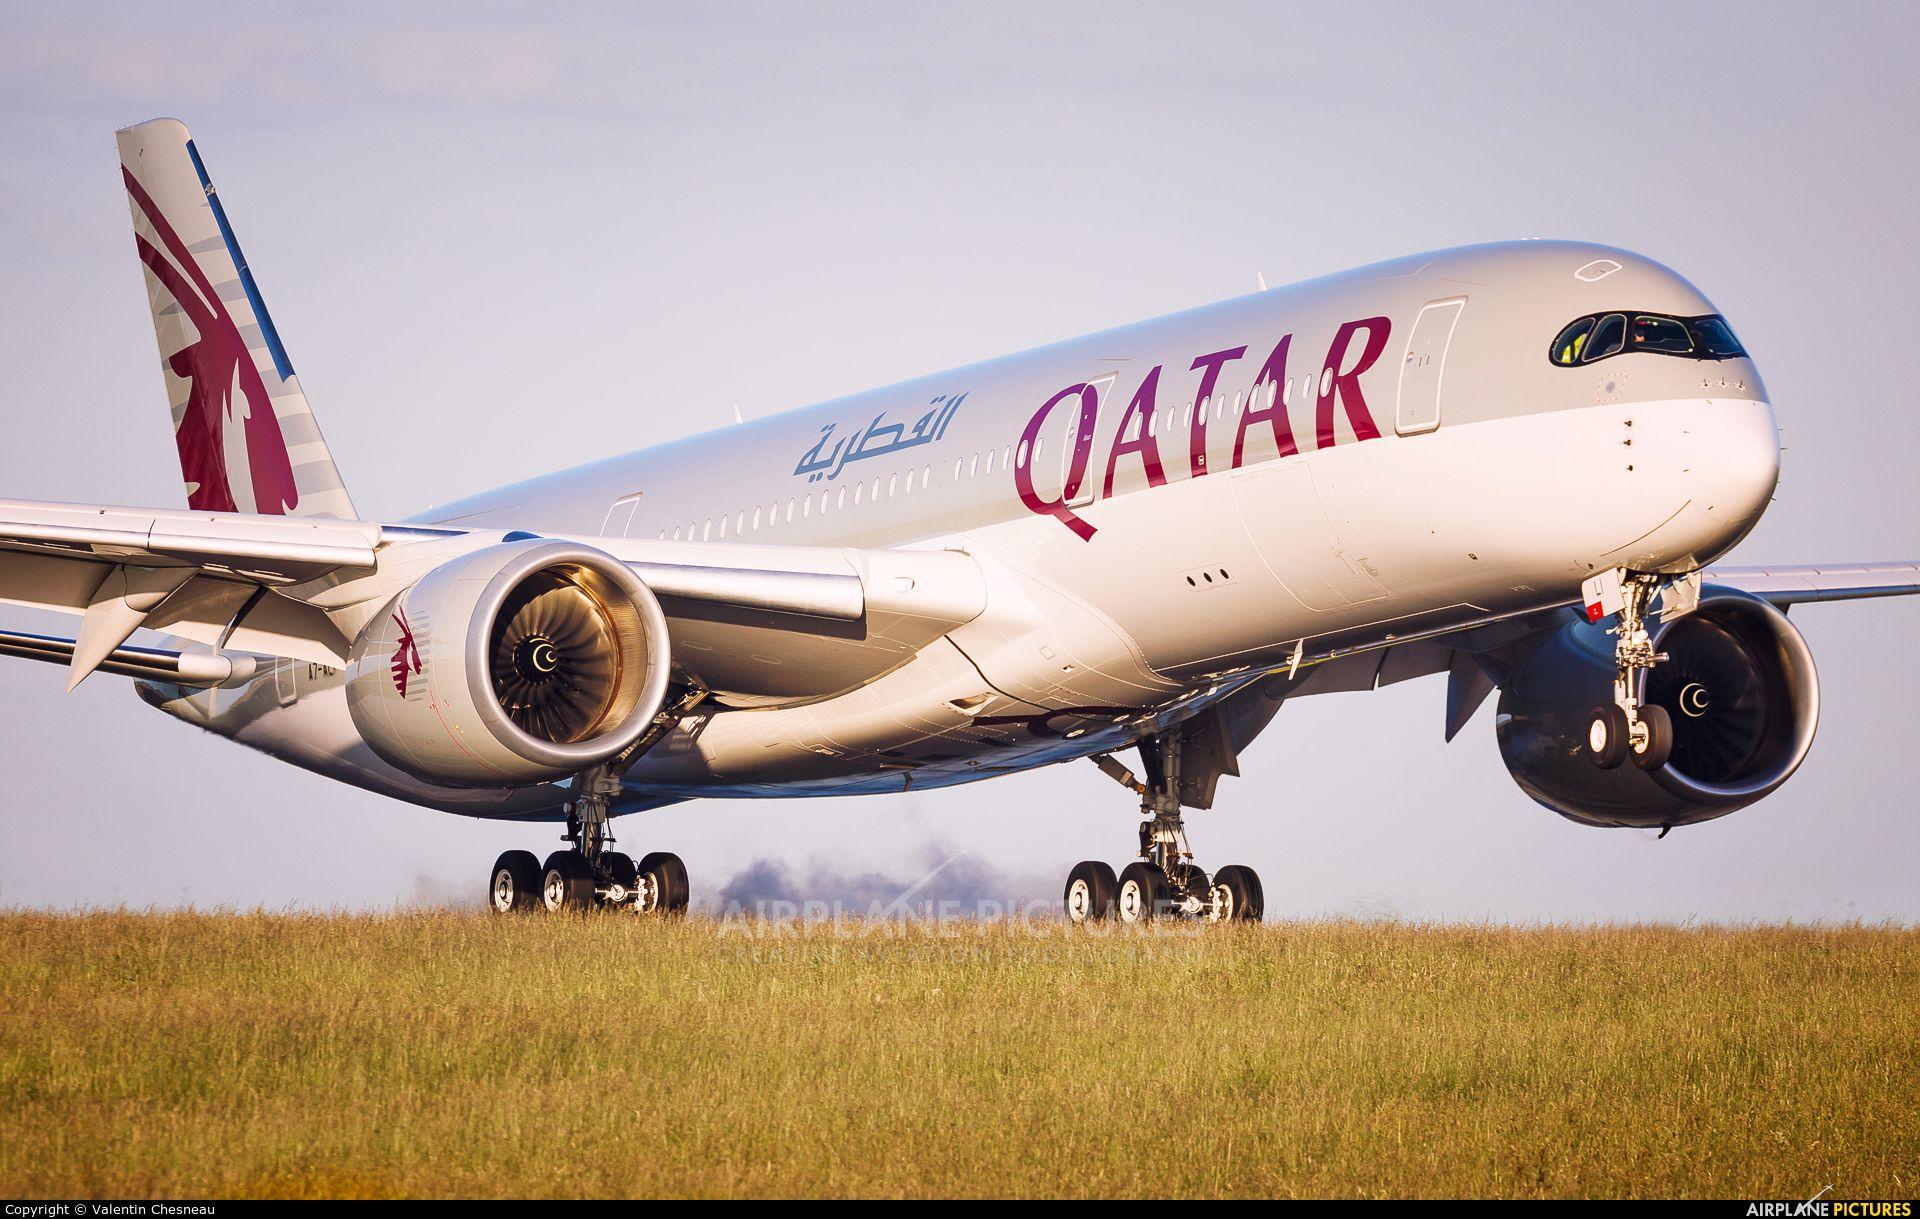 Qatar Airways Wallpapers - Top Free Qatar Airways Backgrounds -  WallpaperAccess